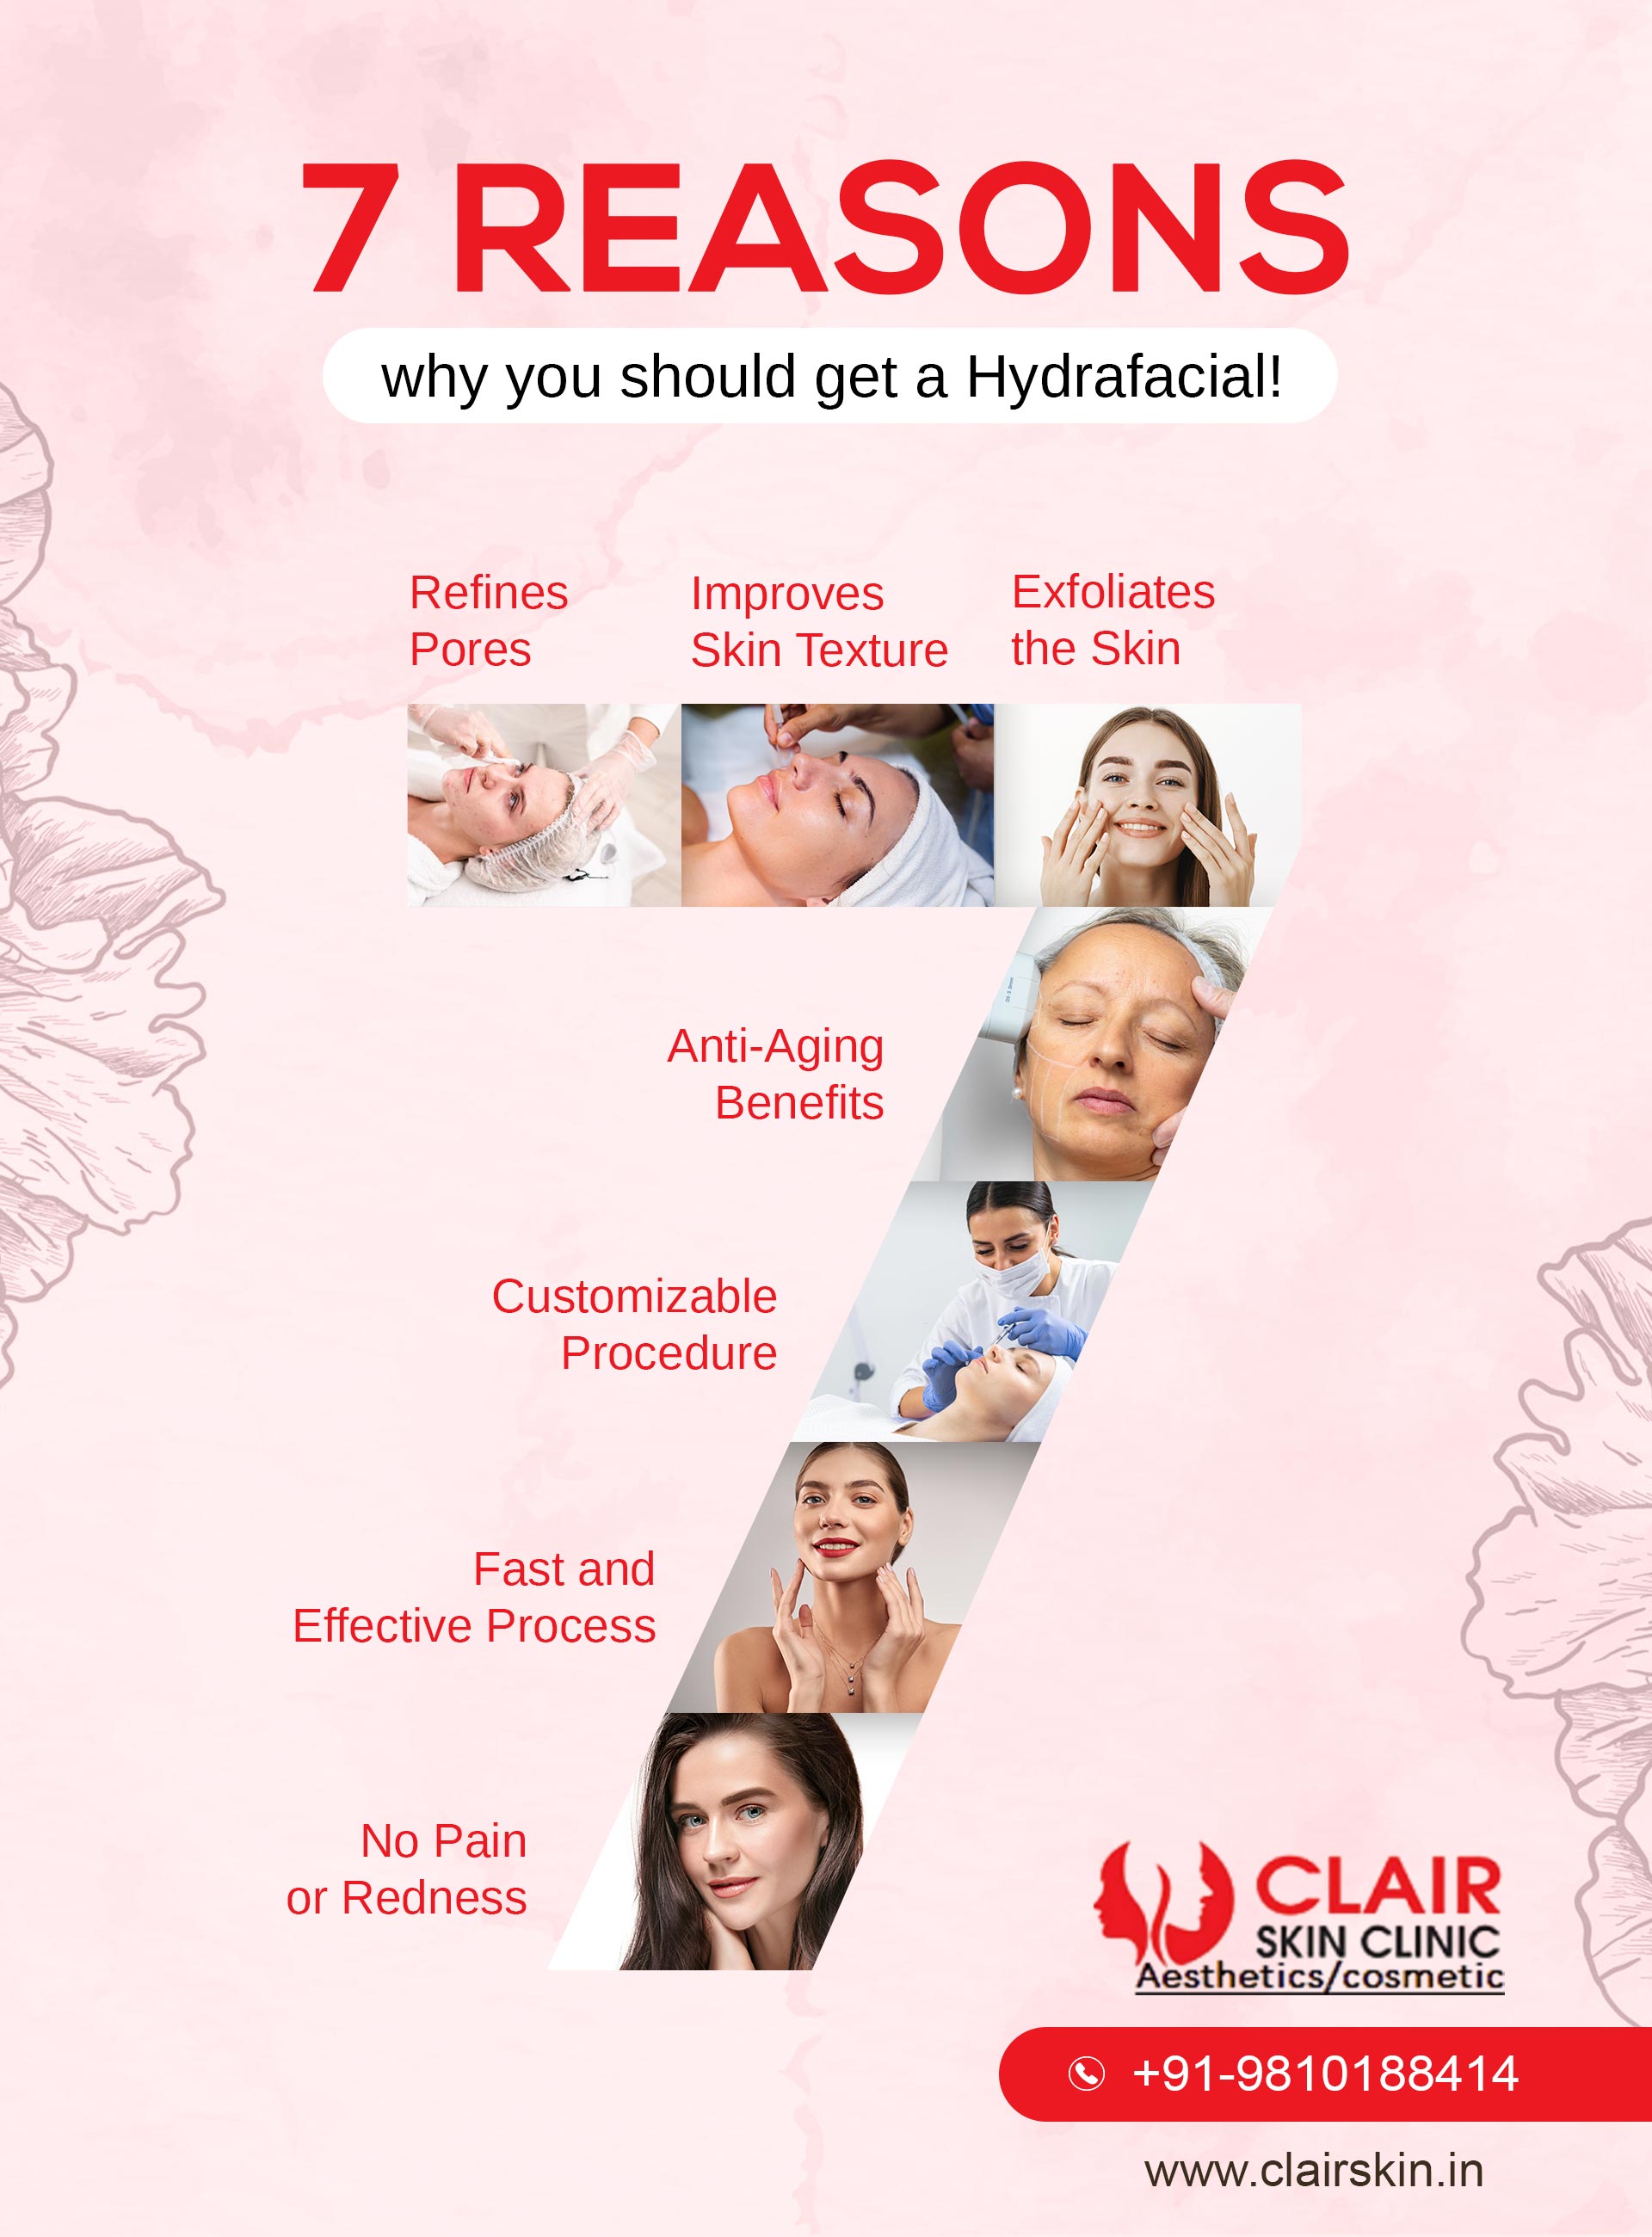 Benefits of hydrafacial